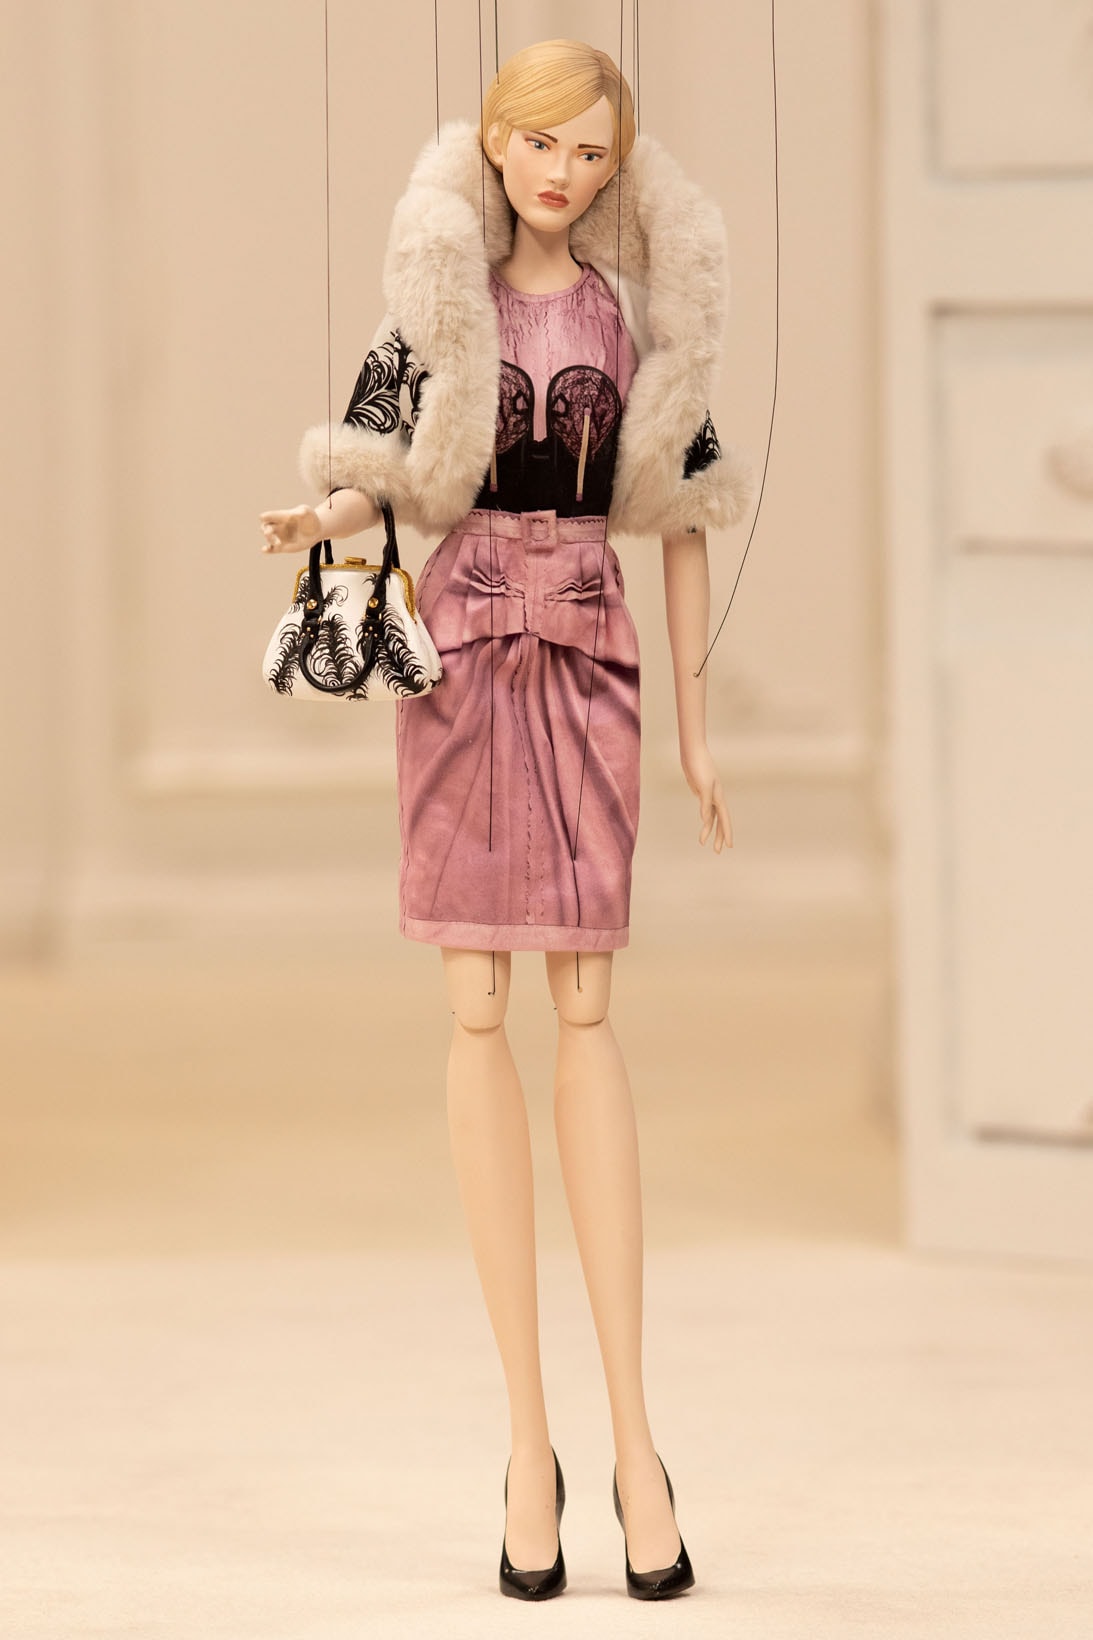 moschino spring summer 2021 puppet show marionette miniature dolls haute couture jim henson creature shop collection jeremy scott